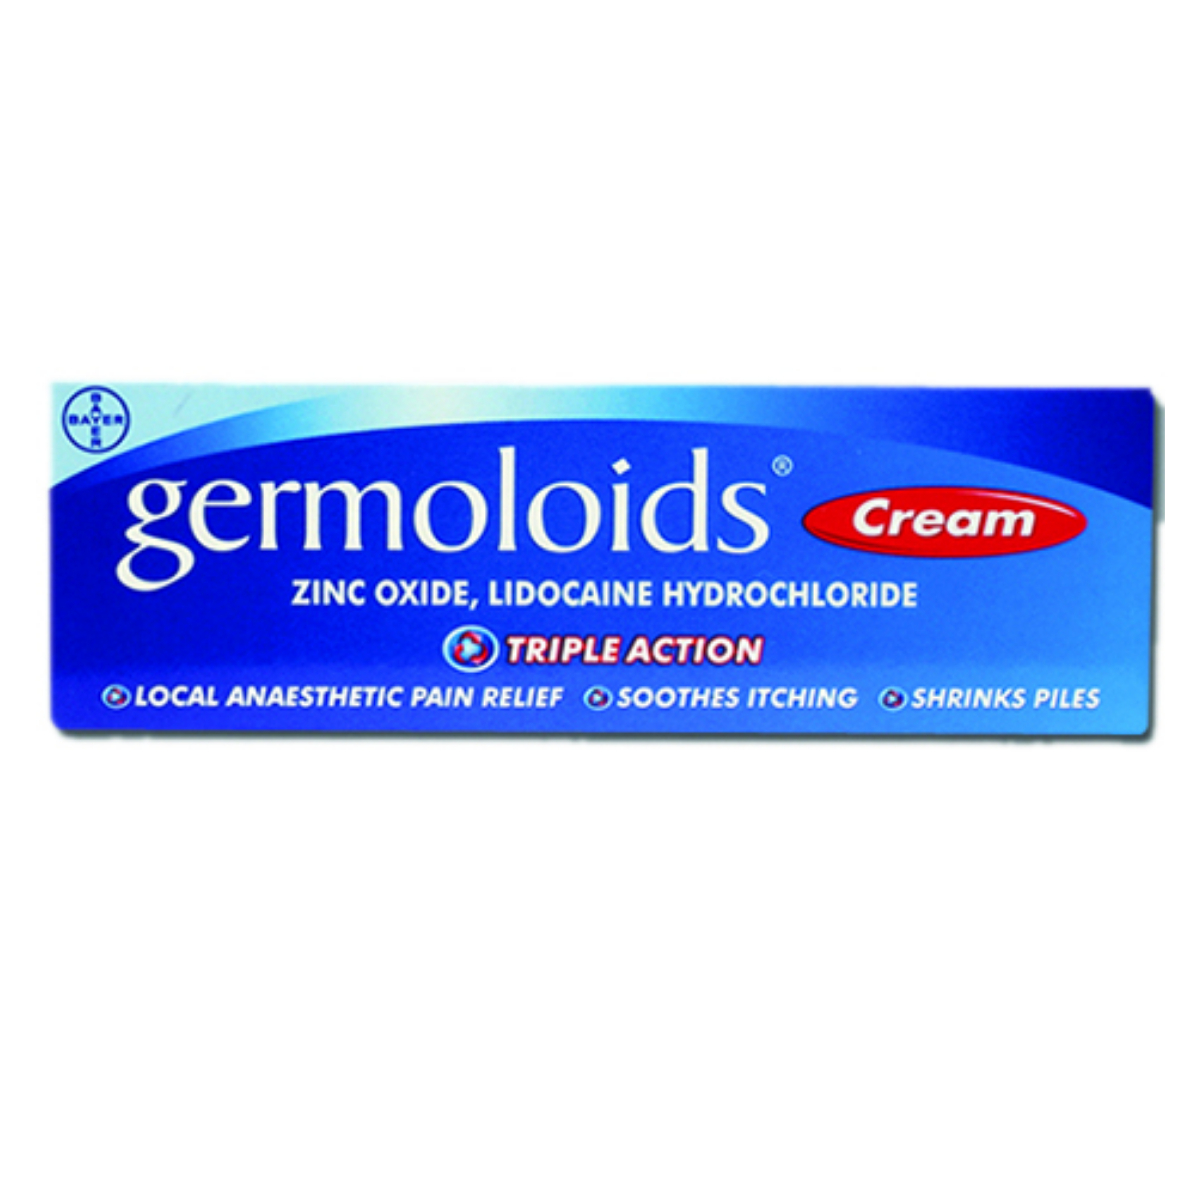 https://lordspharmacy.net/wp-content/uploads/2023/04/Germoloids-Cream-55g-Max-Quality.jpg